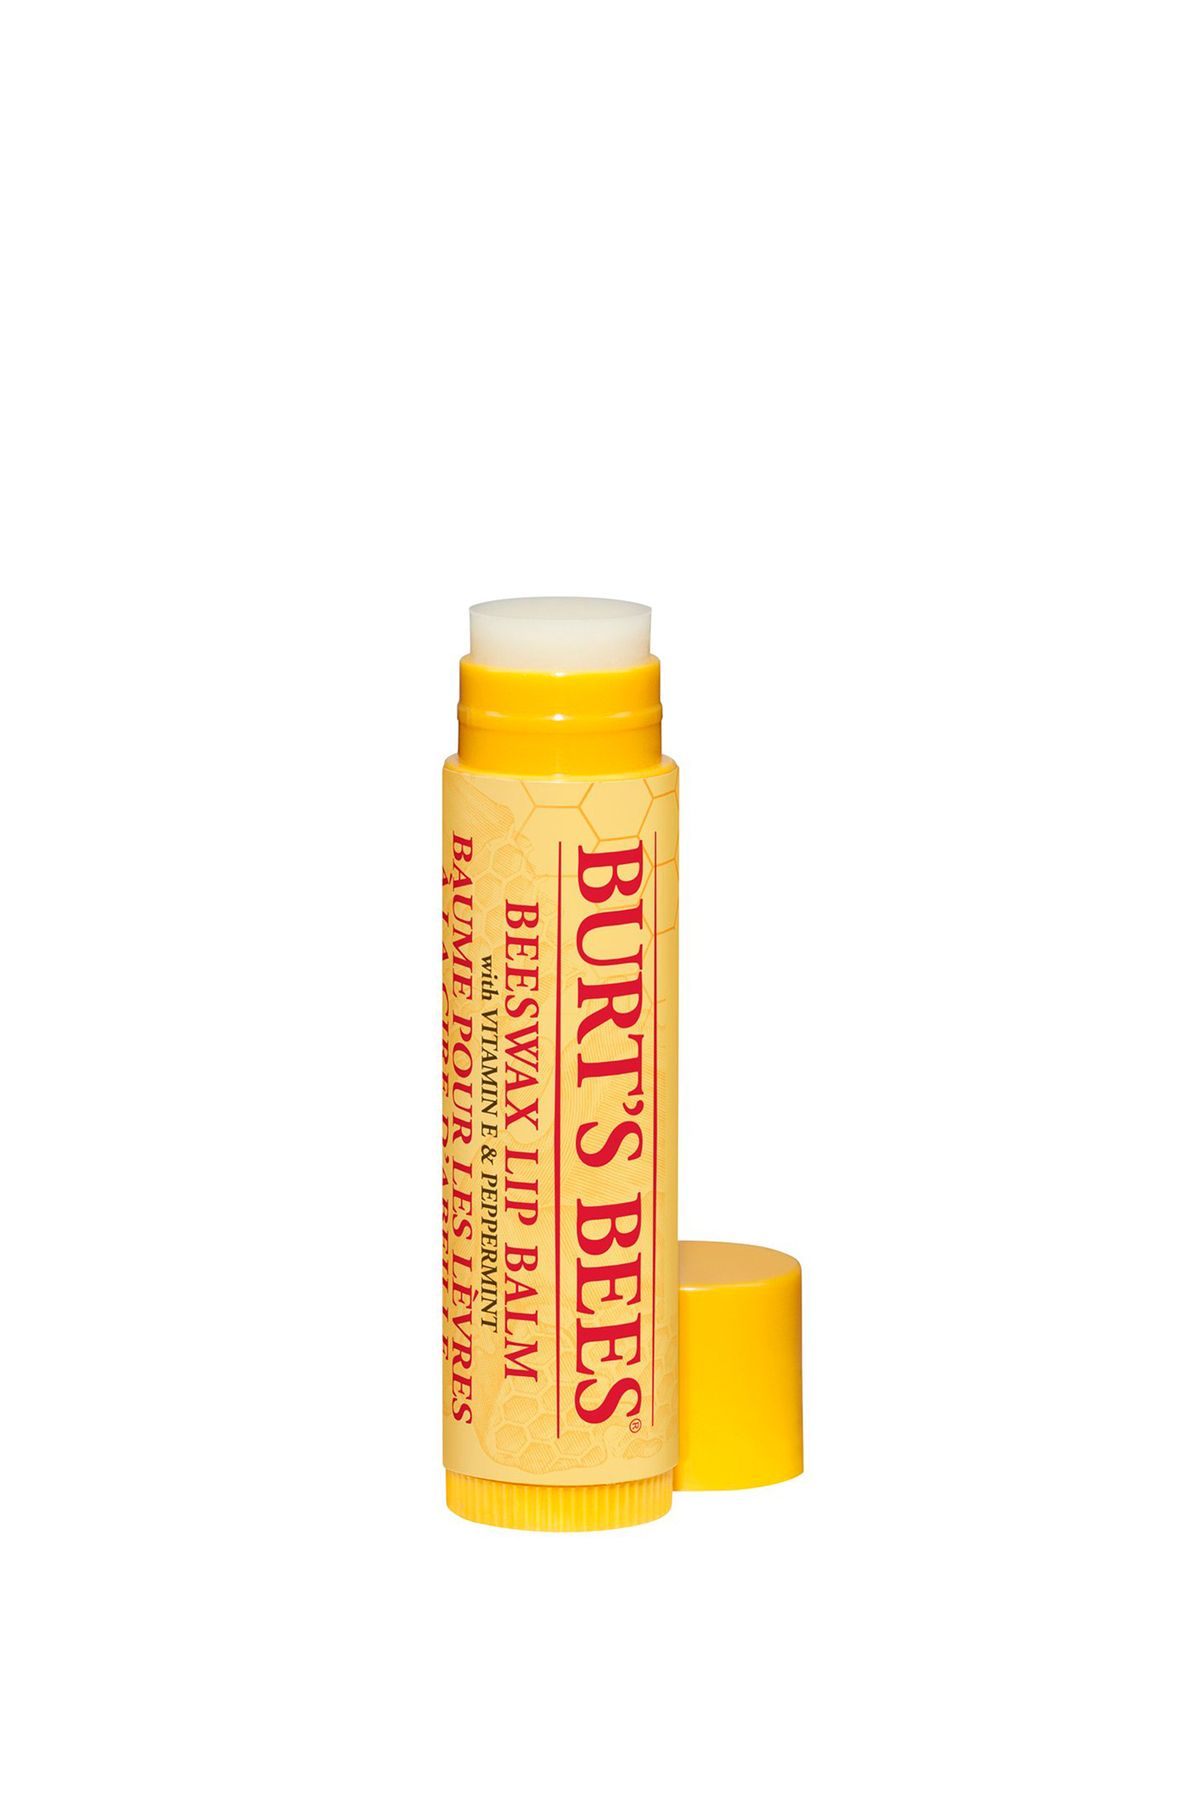 Burt's Bees Beeswax Dudak Bakım Kremi Blister Ambalaj - Beeswax Lip Balm Blister 4,25 G